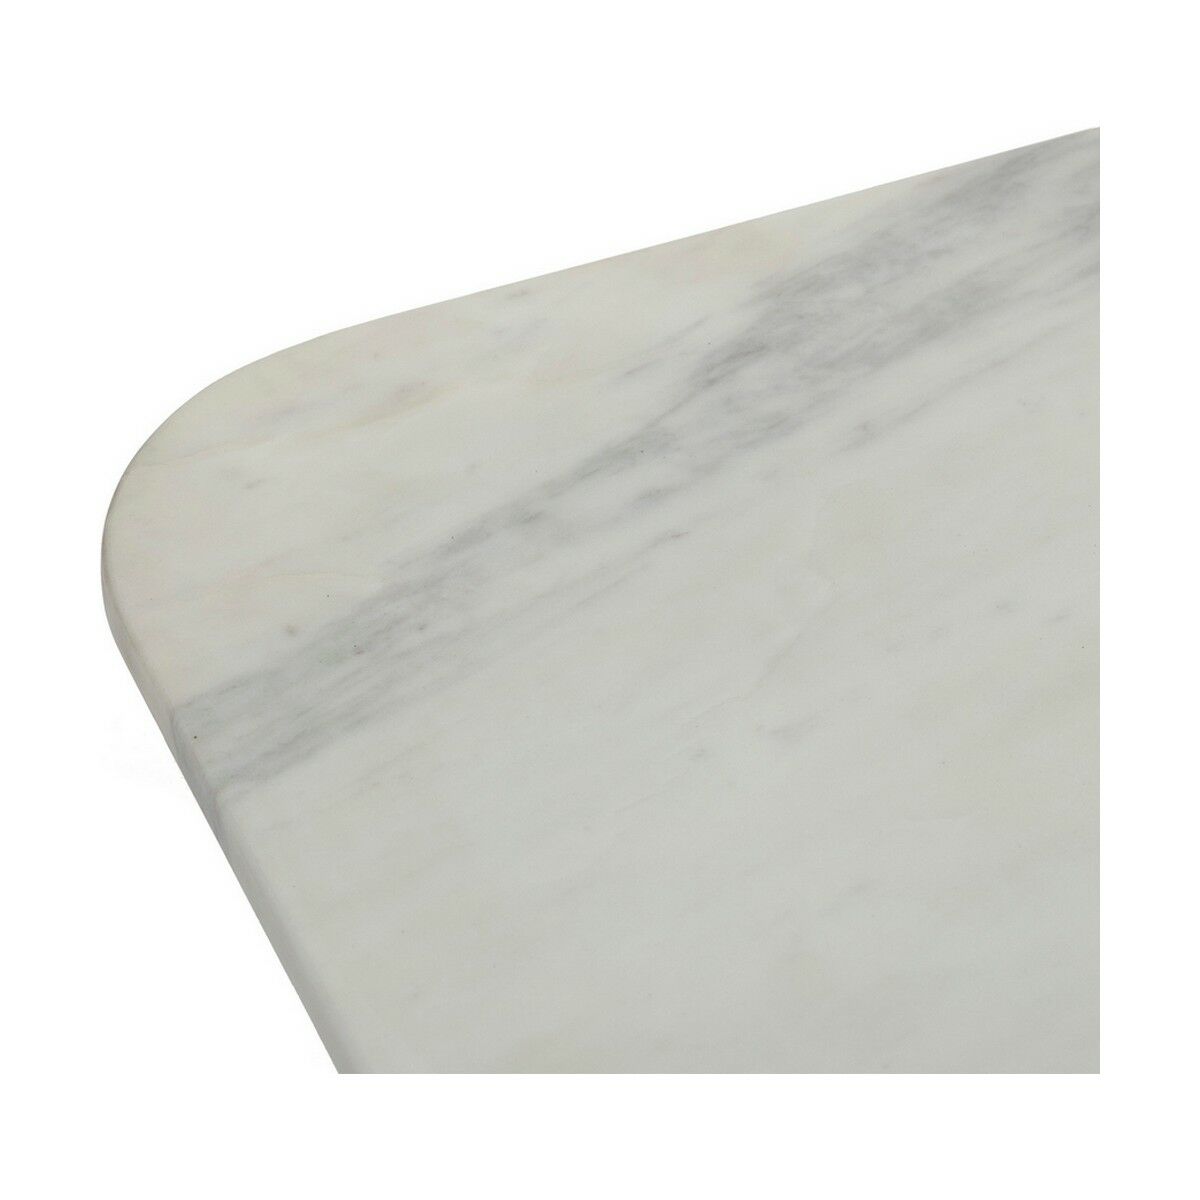 Side table 55 x 55 x 45 cm Black White Marble Iron